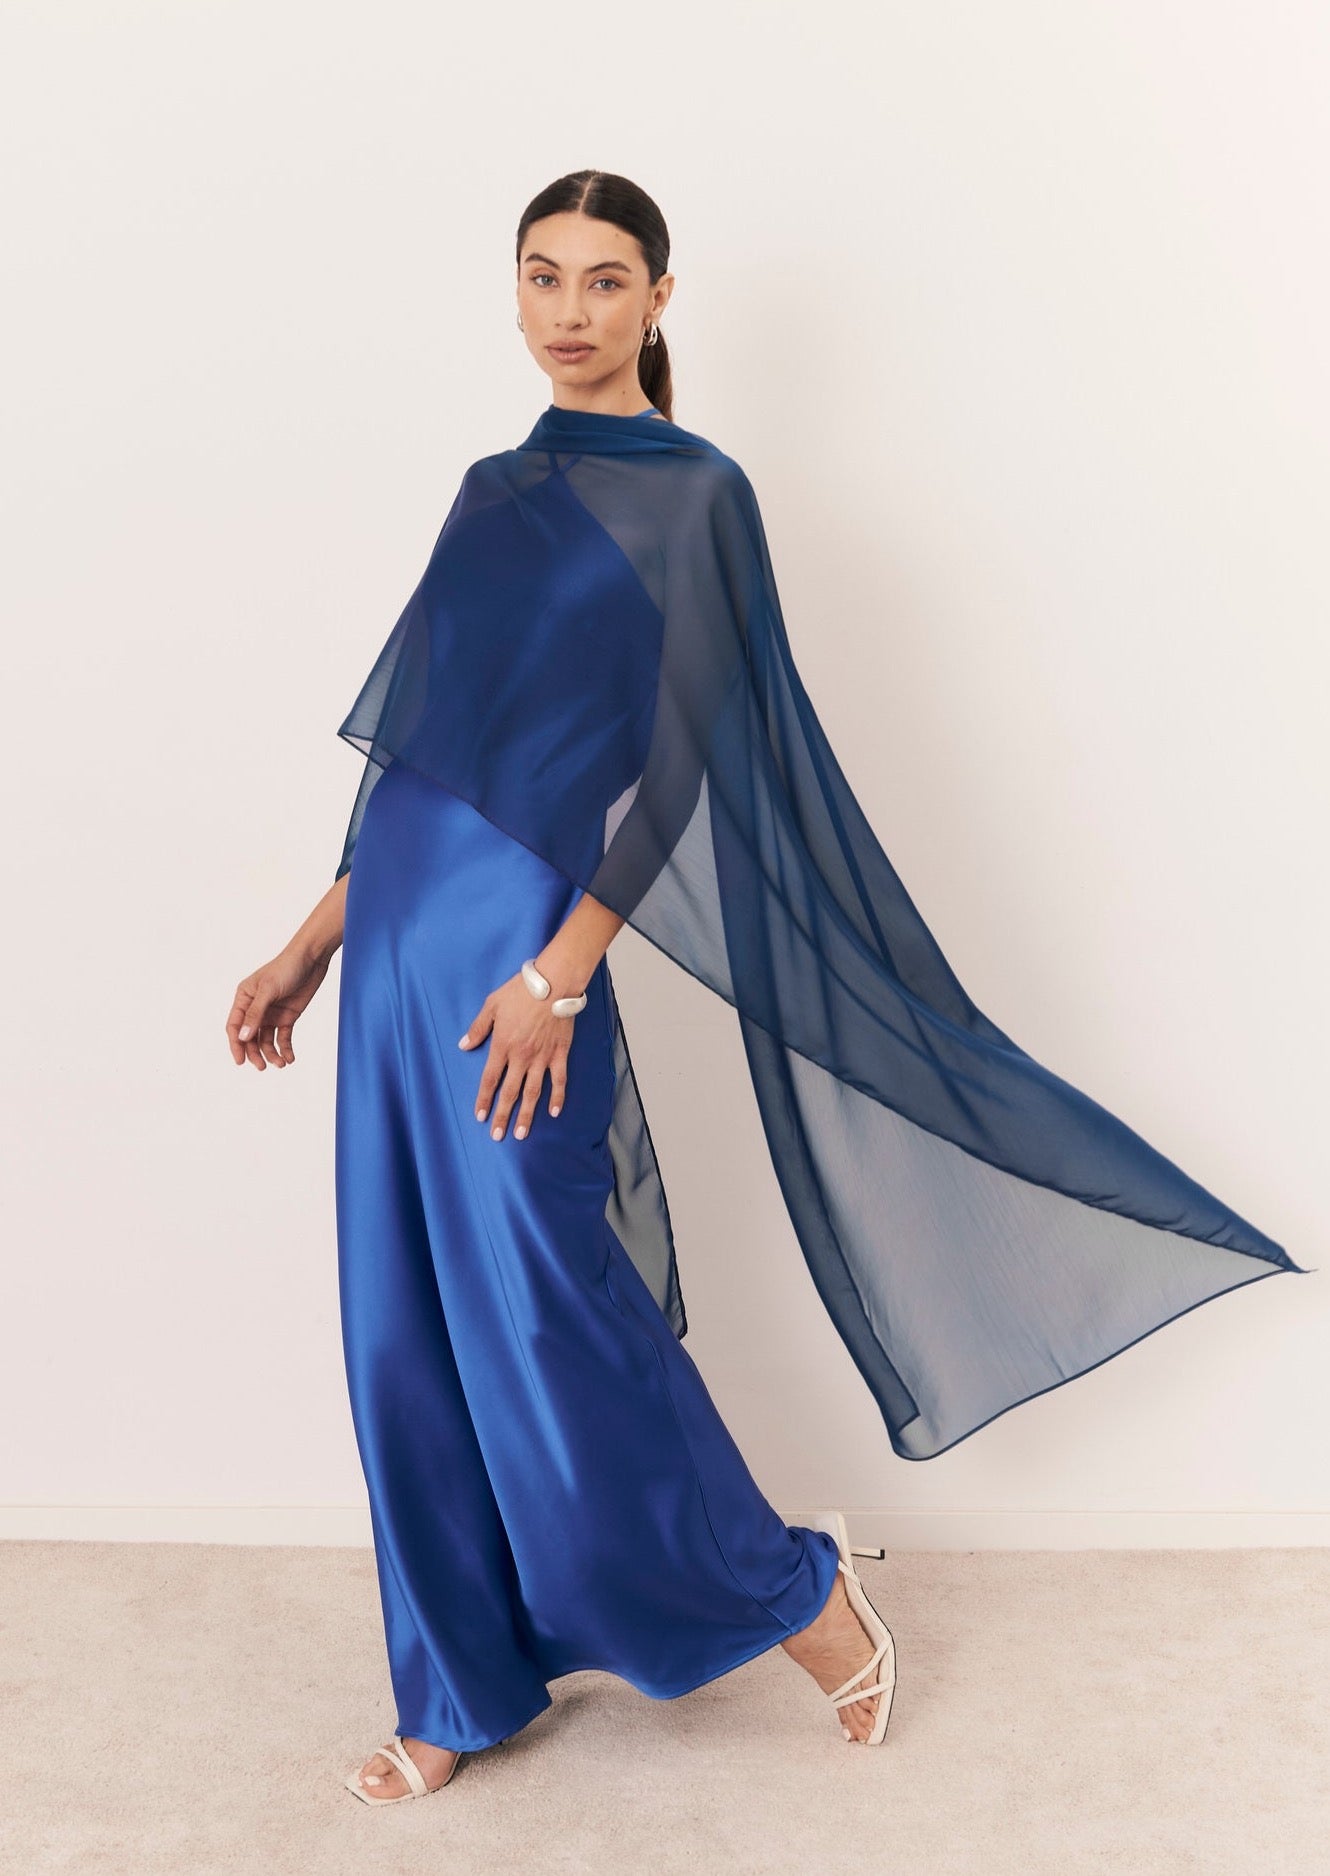 Sorrento shawl in cobalt blue